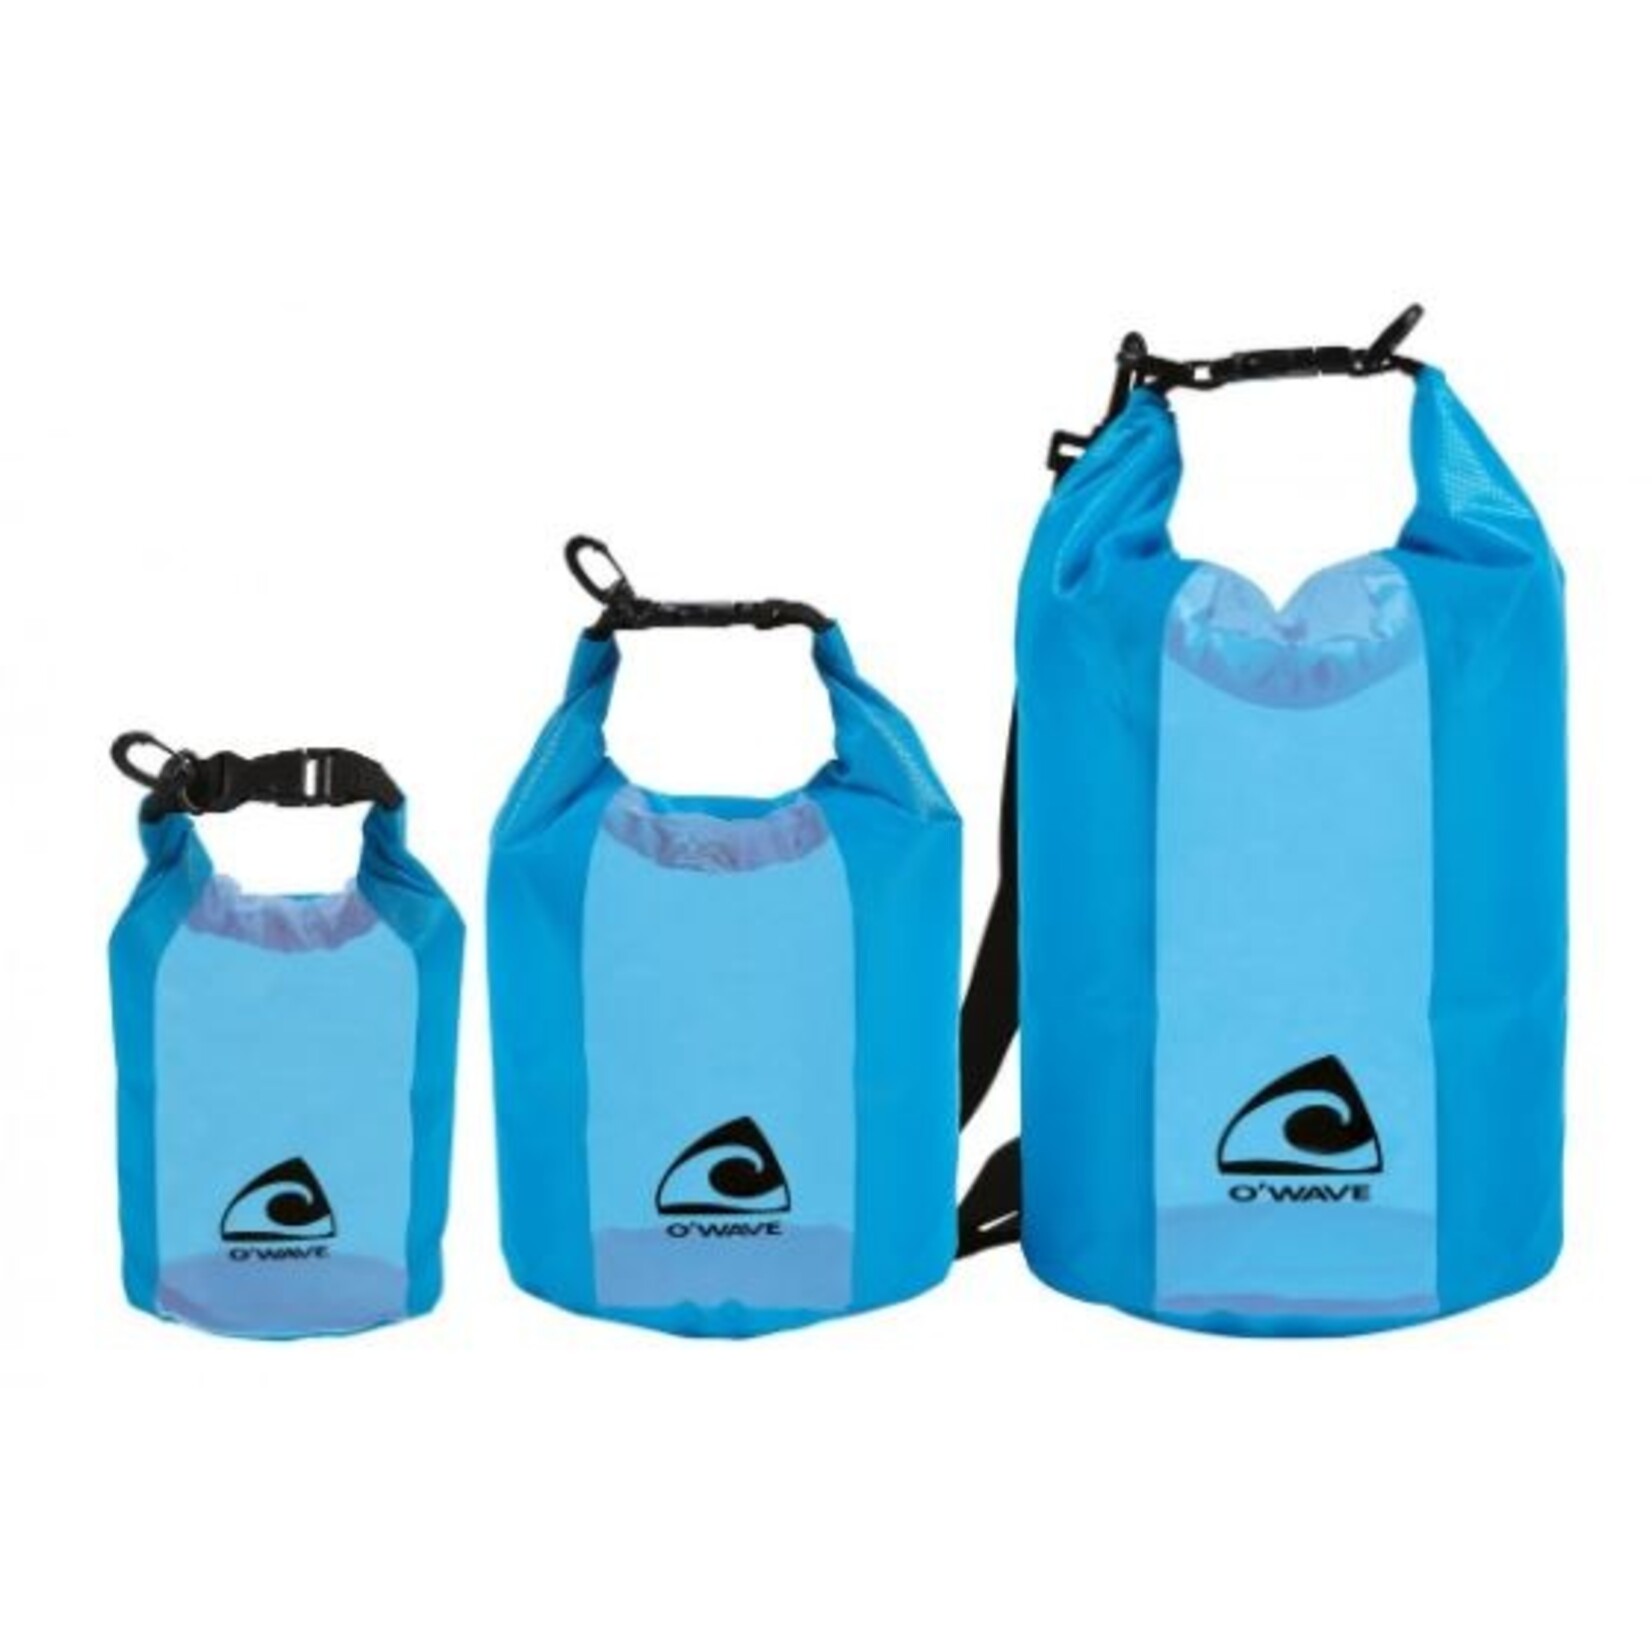 Plastimo O'wave drybag 2l aquablue